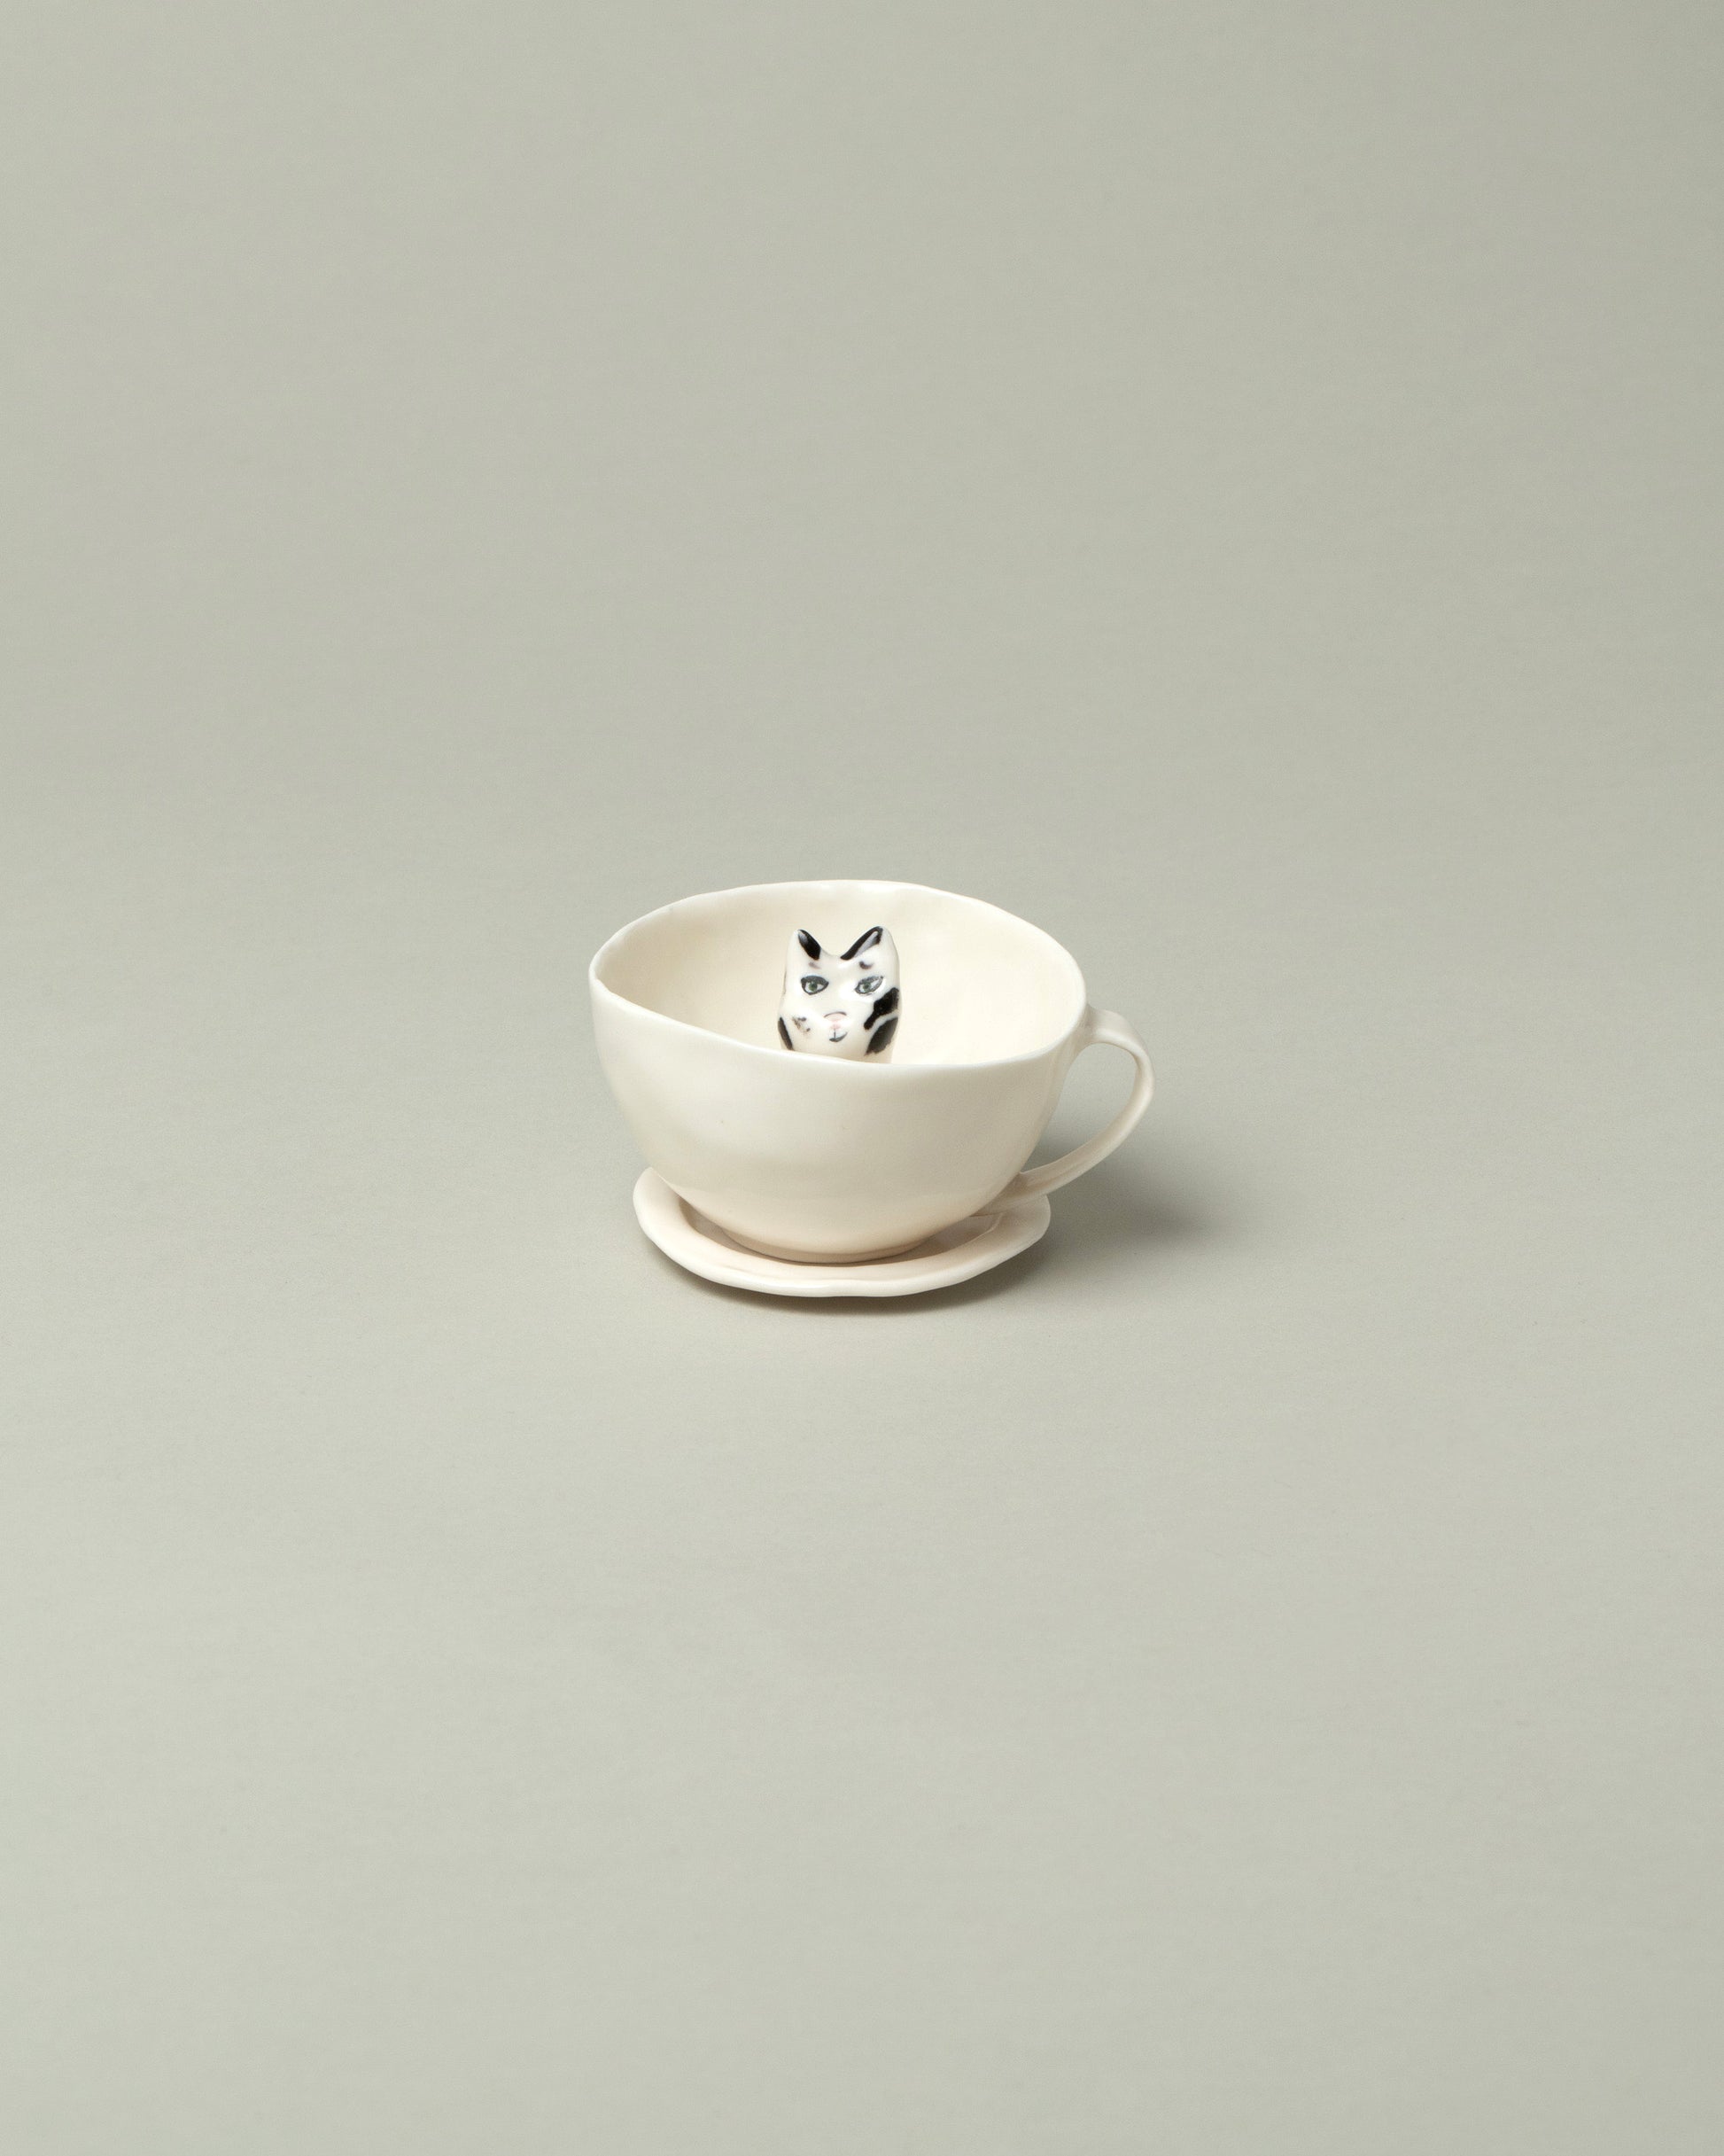 Eleonor Boström Black Spots Cat Tea Cup with Saucer on light color background.